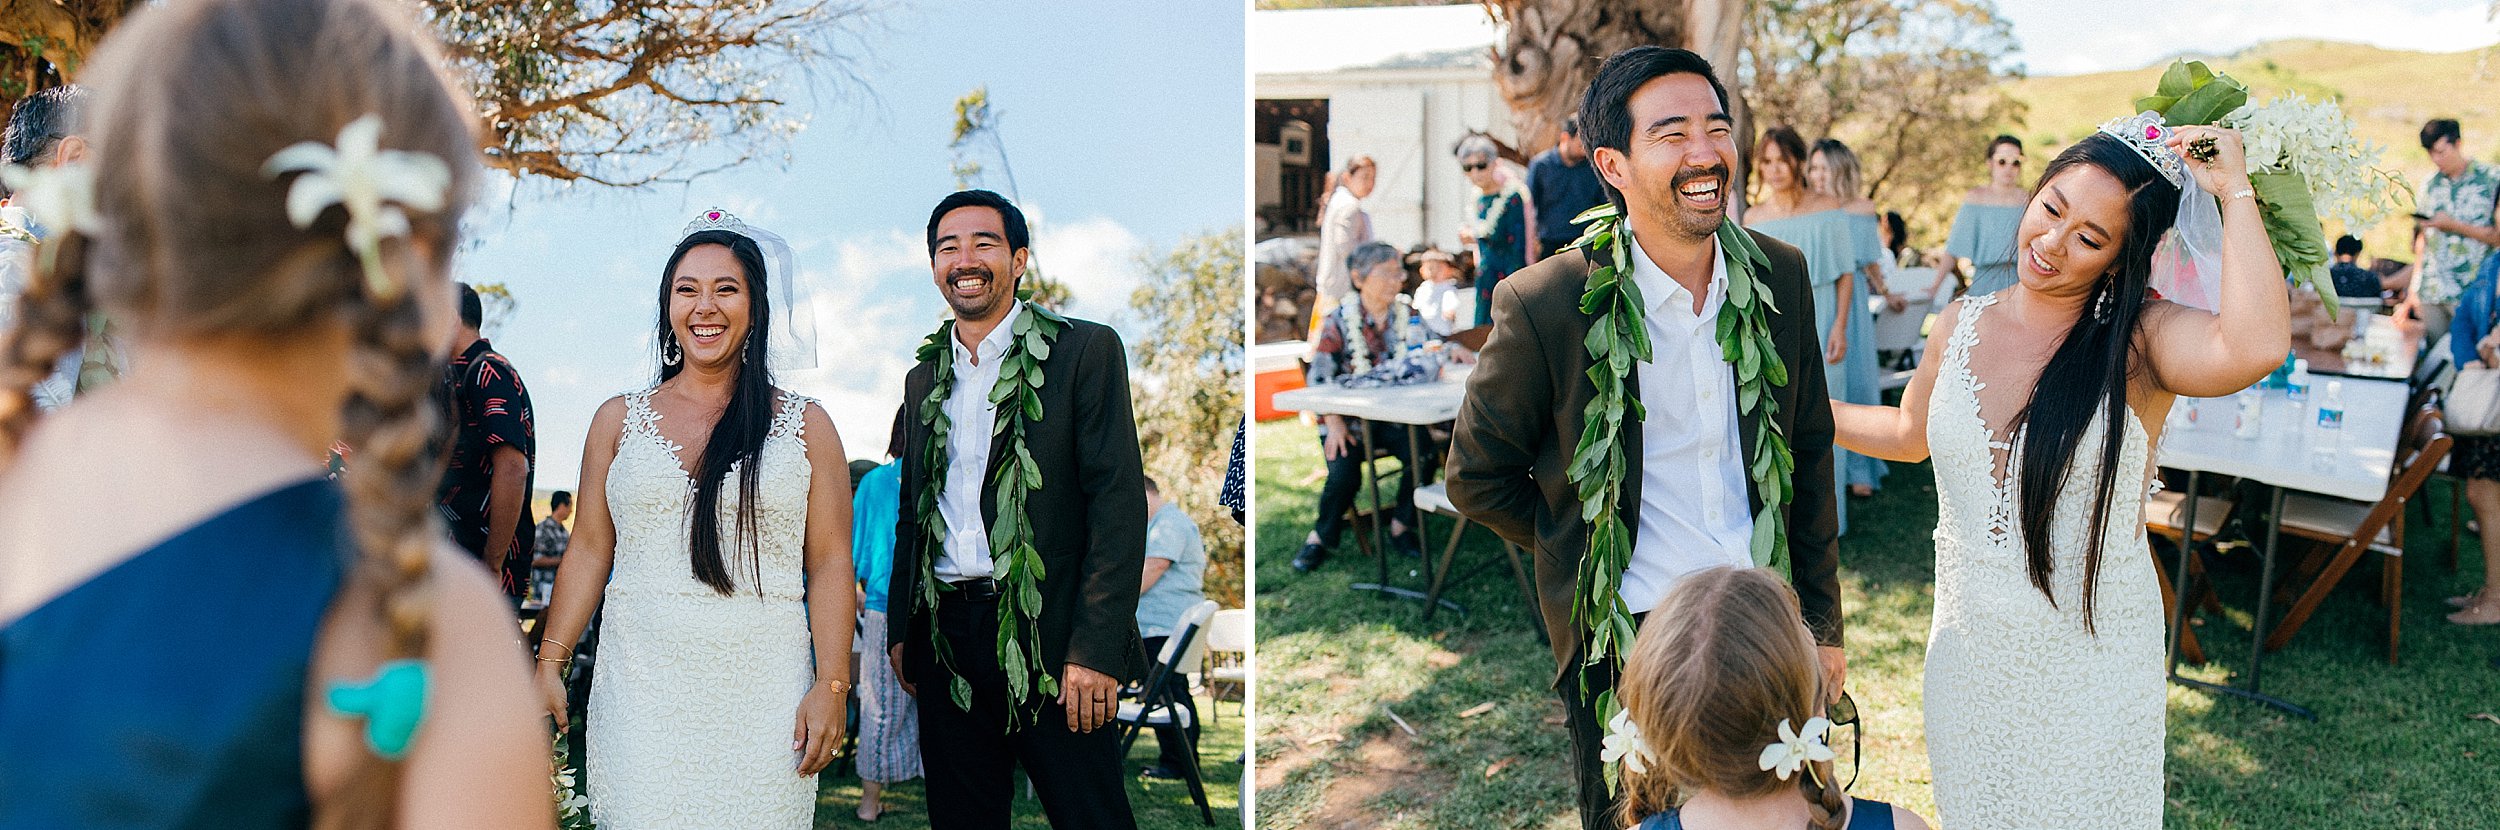  Kirsten & Kyle - Backyard Wedding at Anna Ranch and Mauna Kea 